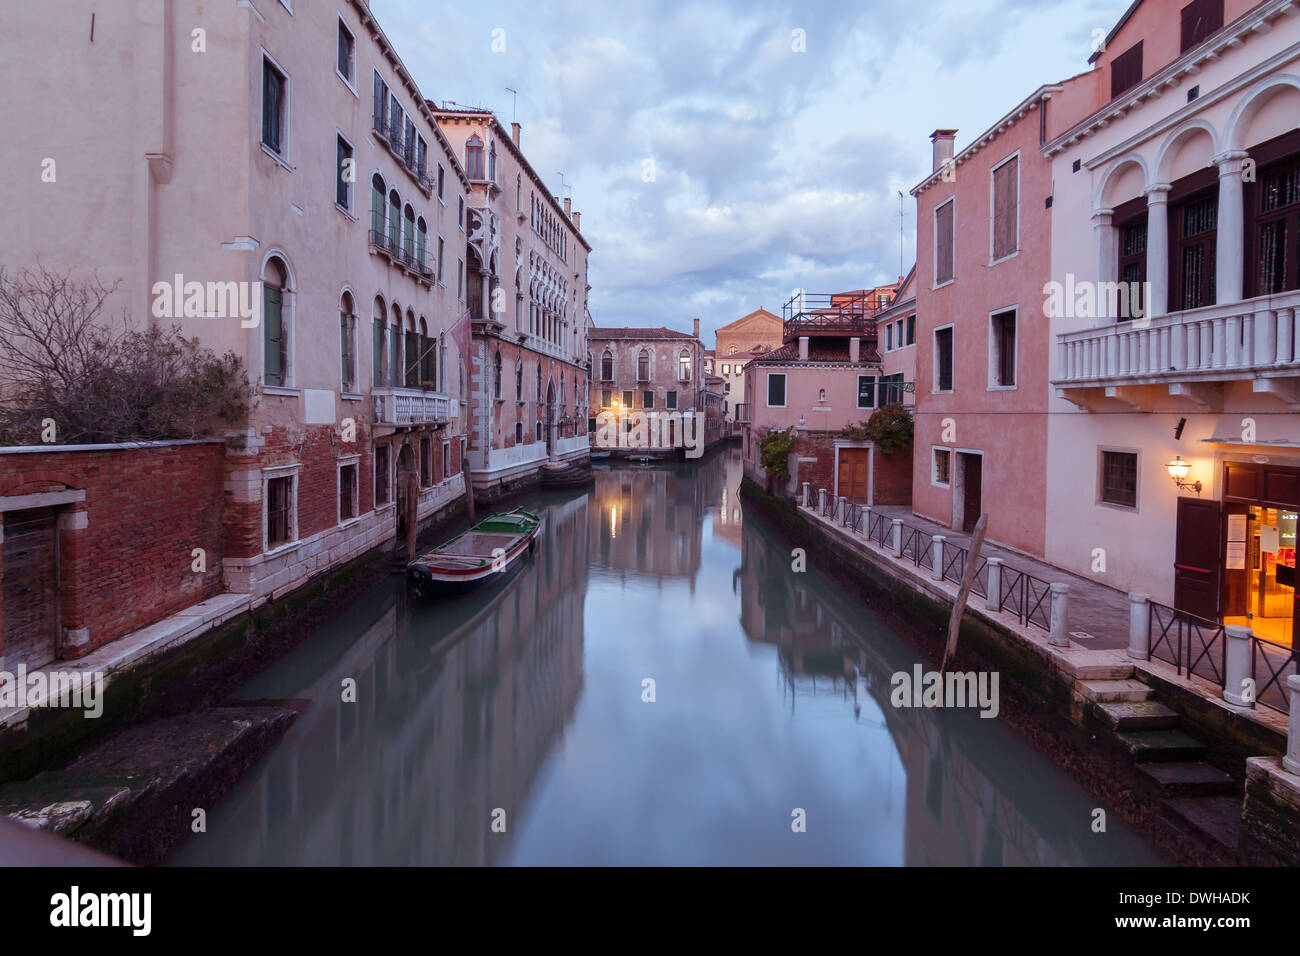 Waterway with gondola boat in Venice Italy Stock Photo